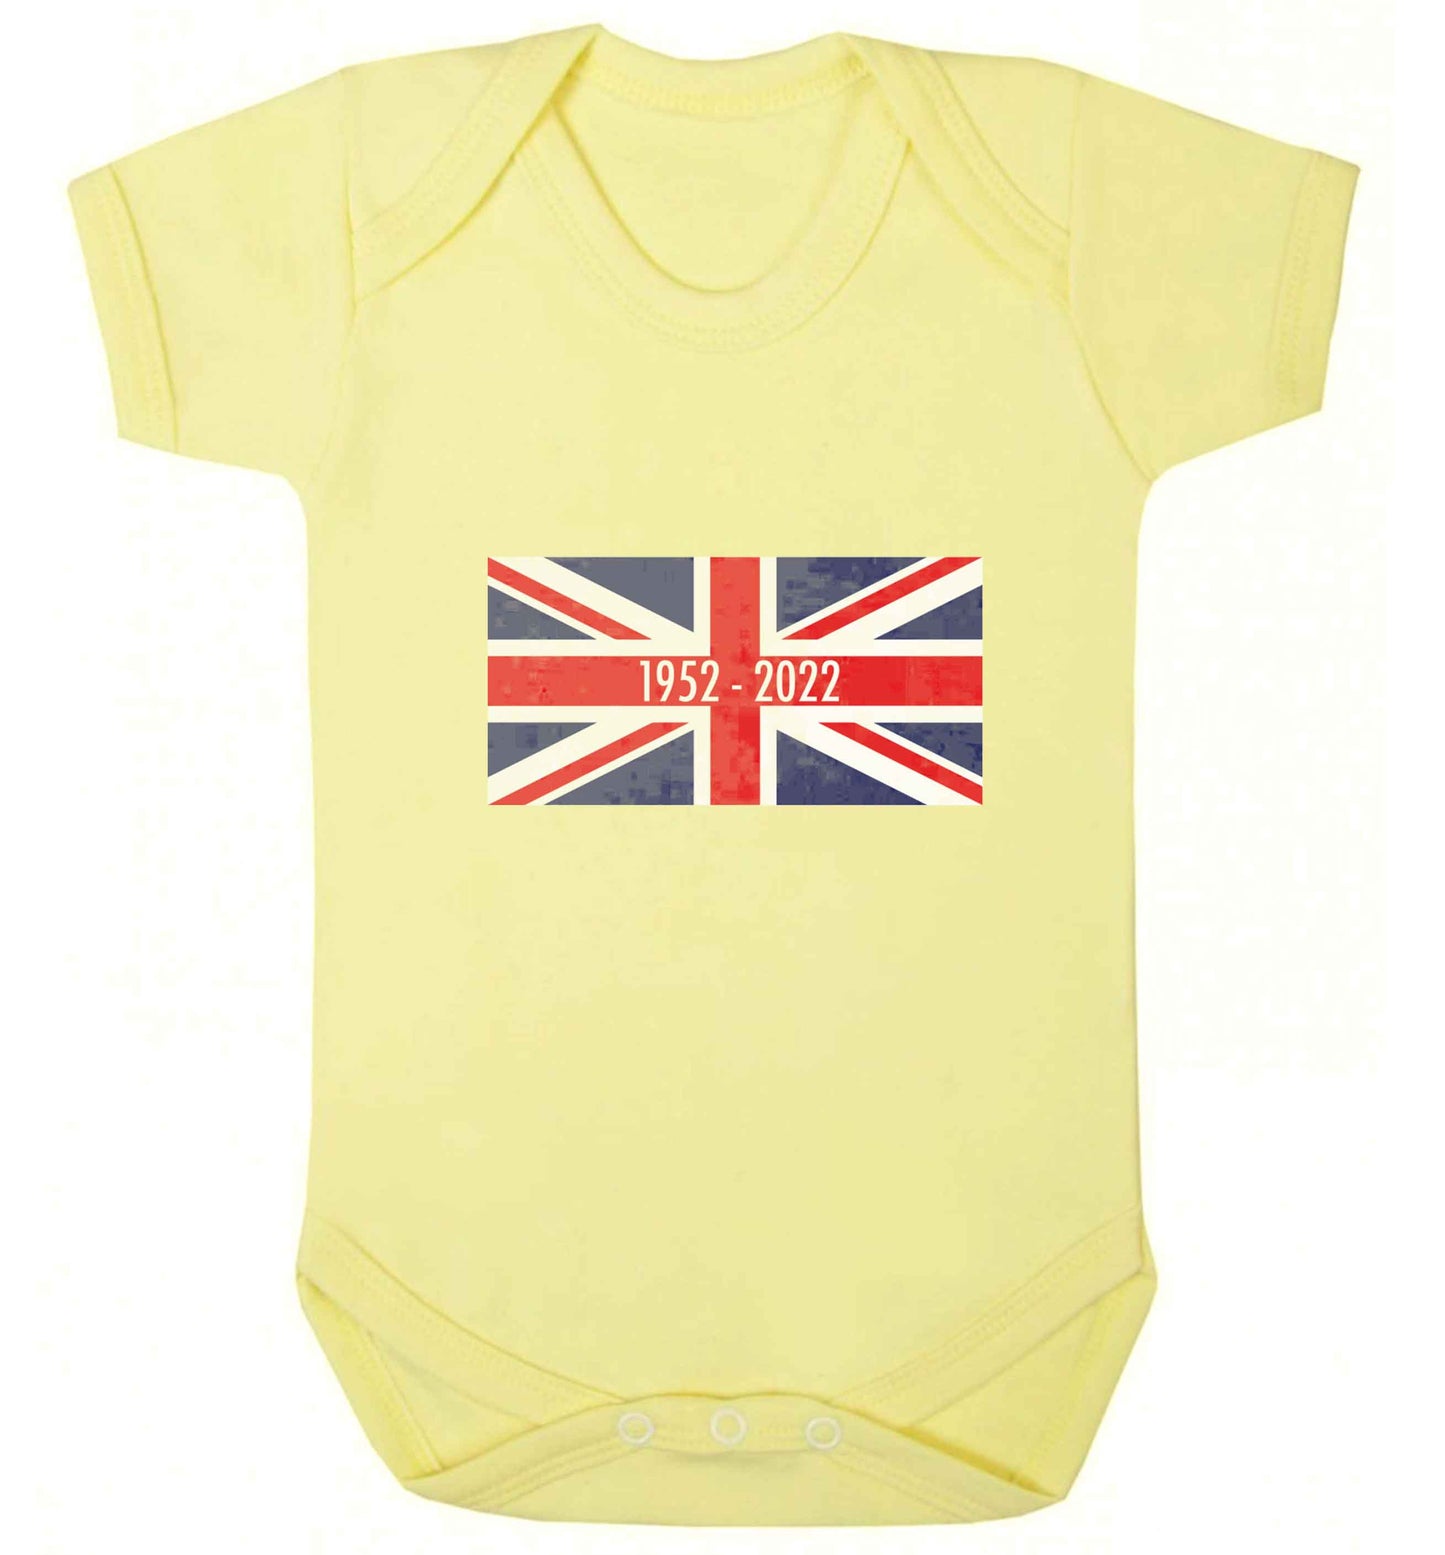 British flag Queens jubilee baby vest pale yellow 18-24 months